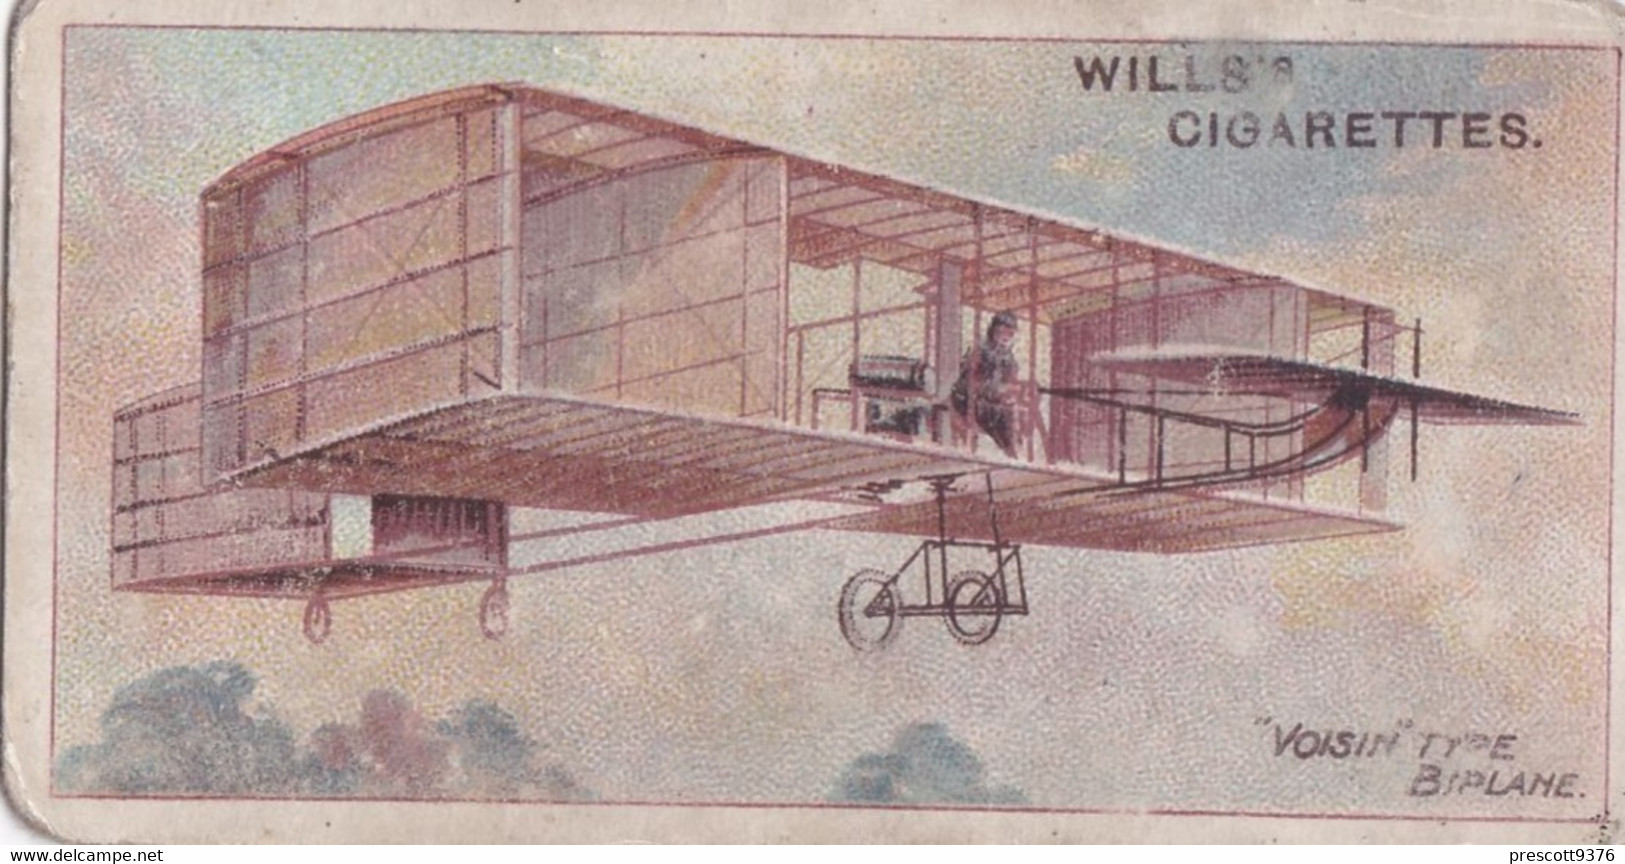 AVIATION 1910  -  37 Voisin Biplane - Wills Cigarette Card - Original  - Antique - Airship - Monoplane - Wills